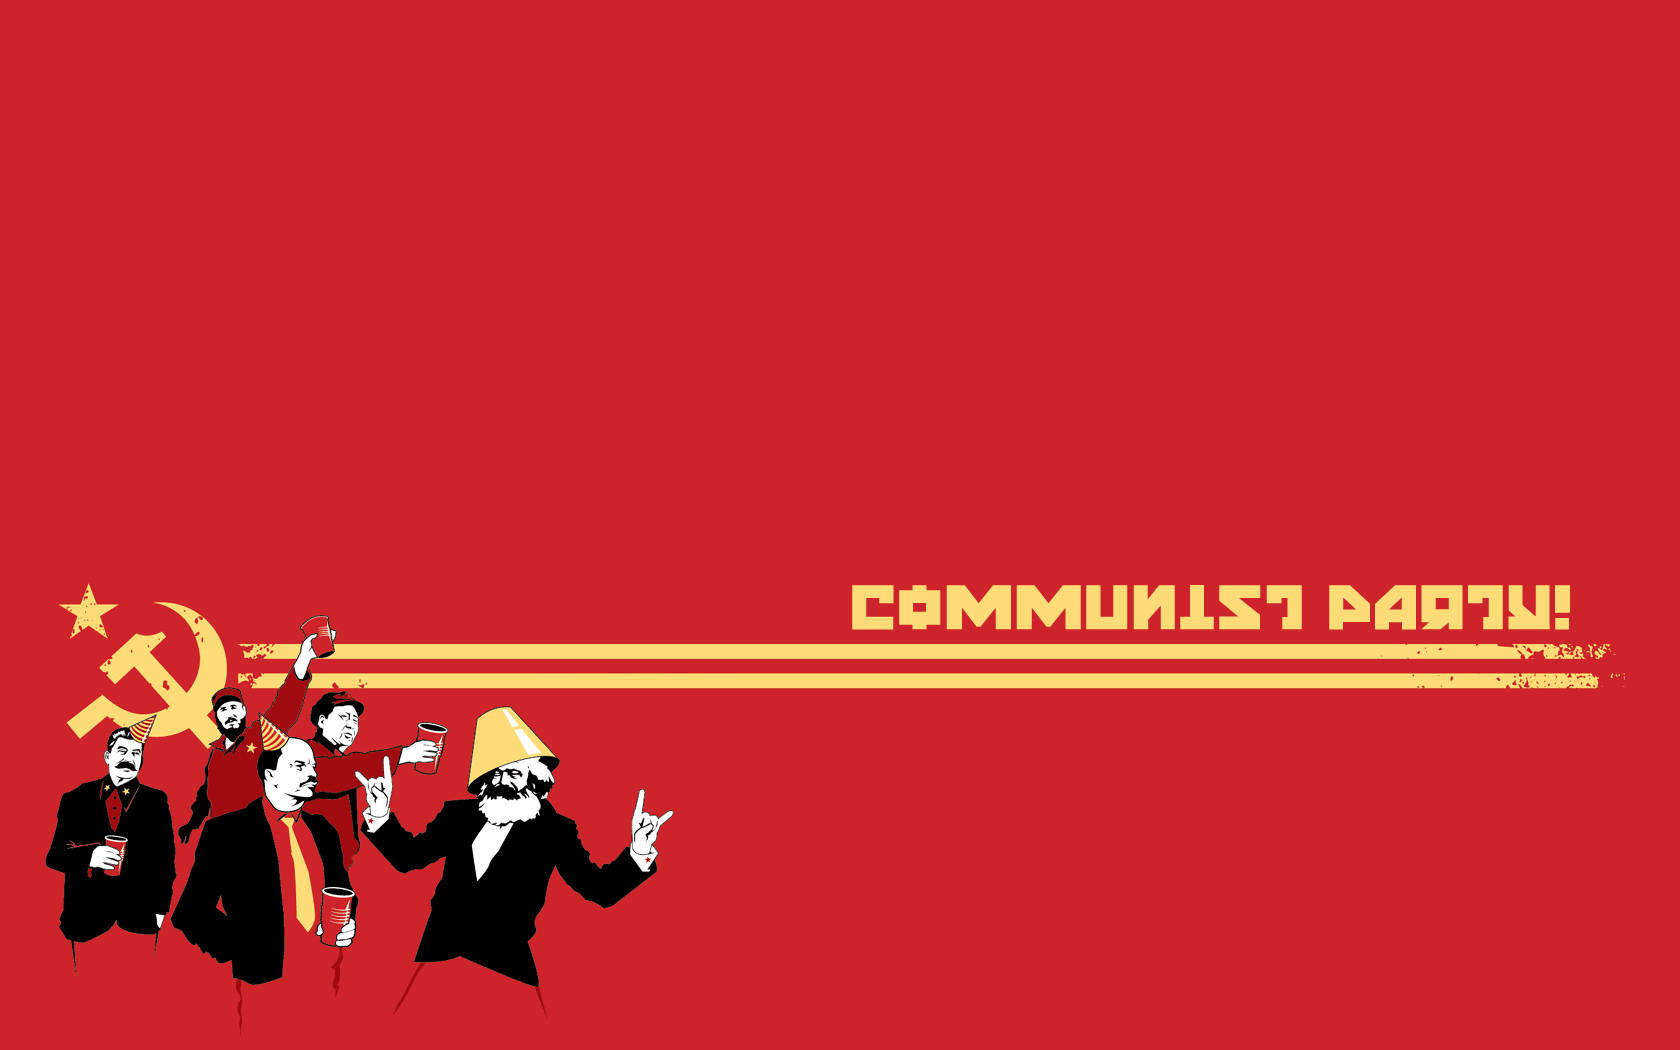 Sowjetunionflagge Des Kommunismus Wallpaper